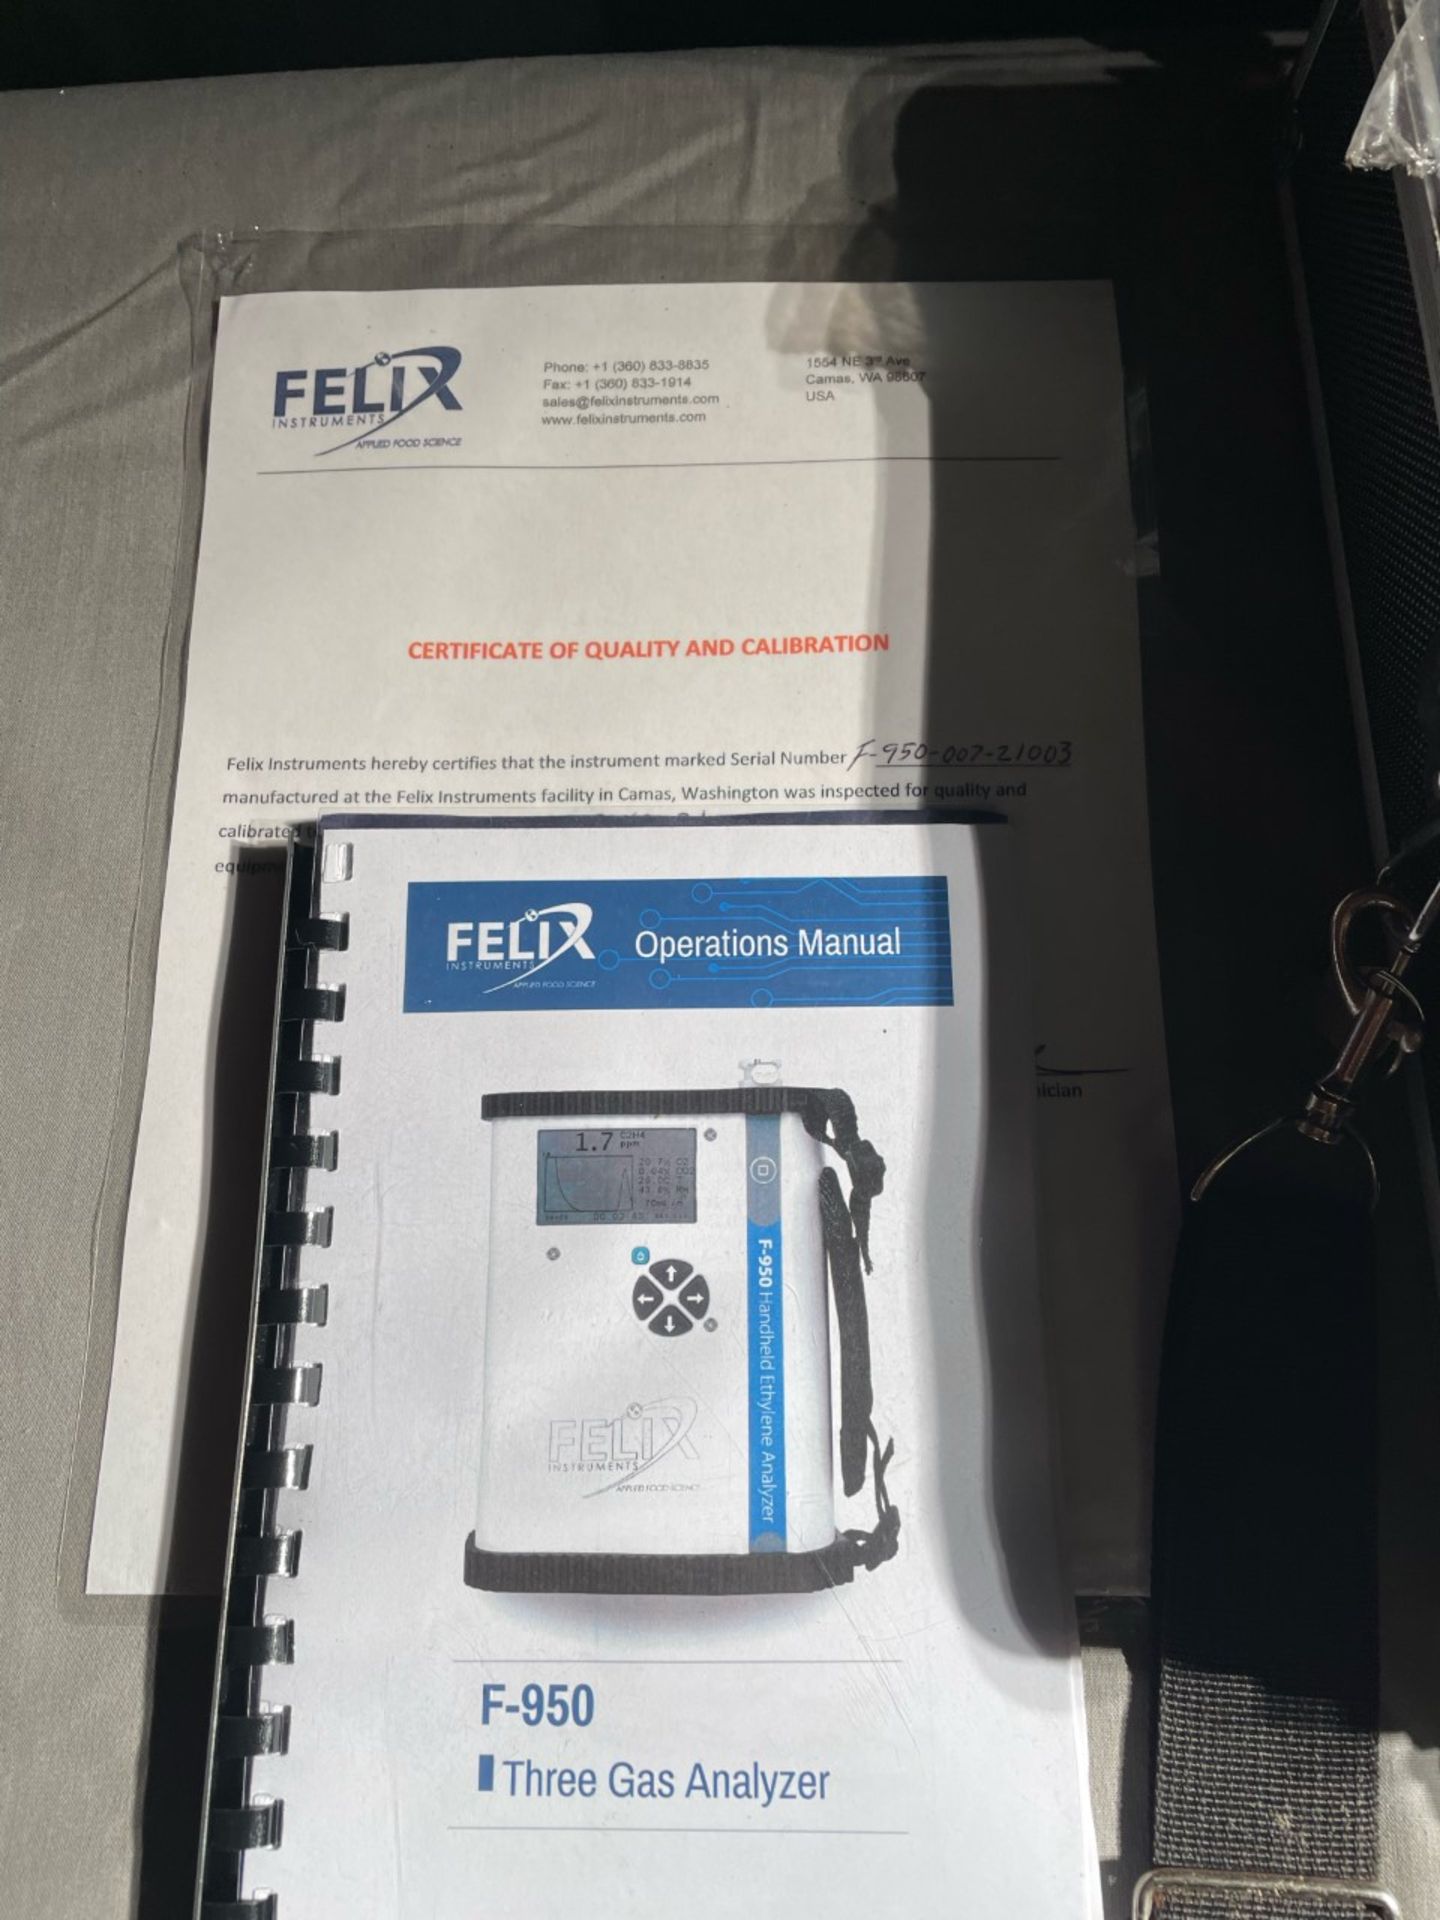 1x Felix F-950 three gas analyzer. Everything in box looks new and in original packaging - Bild 3 aus 4